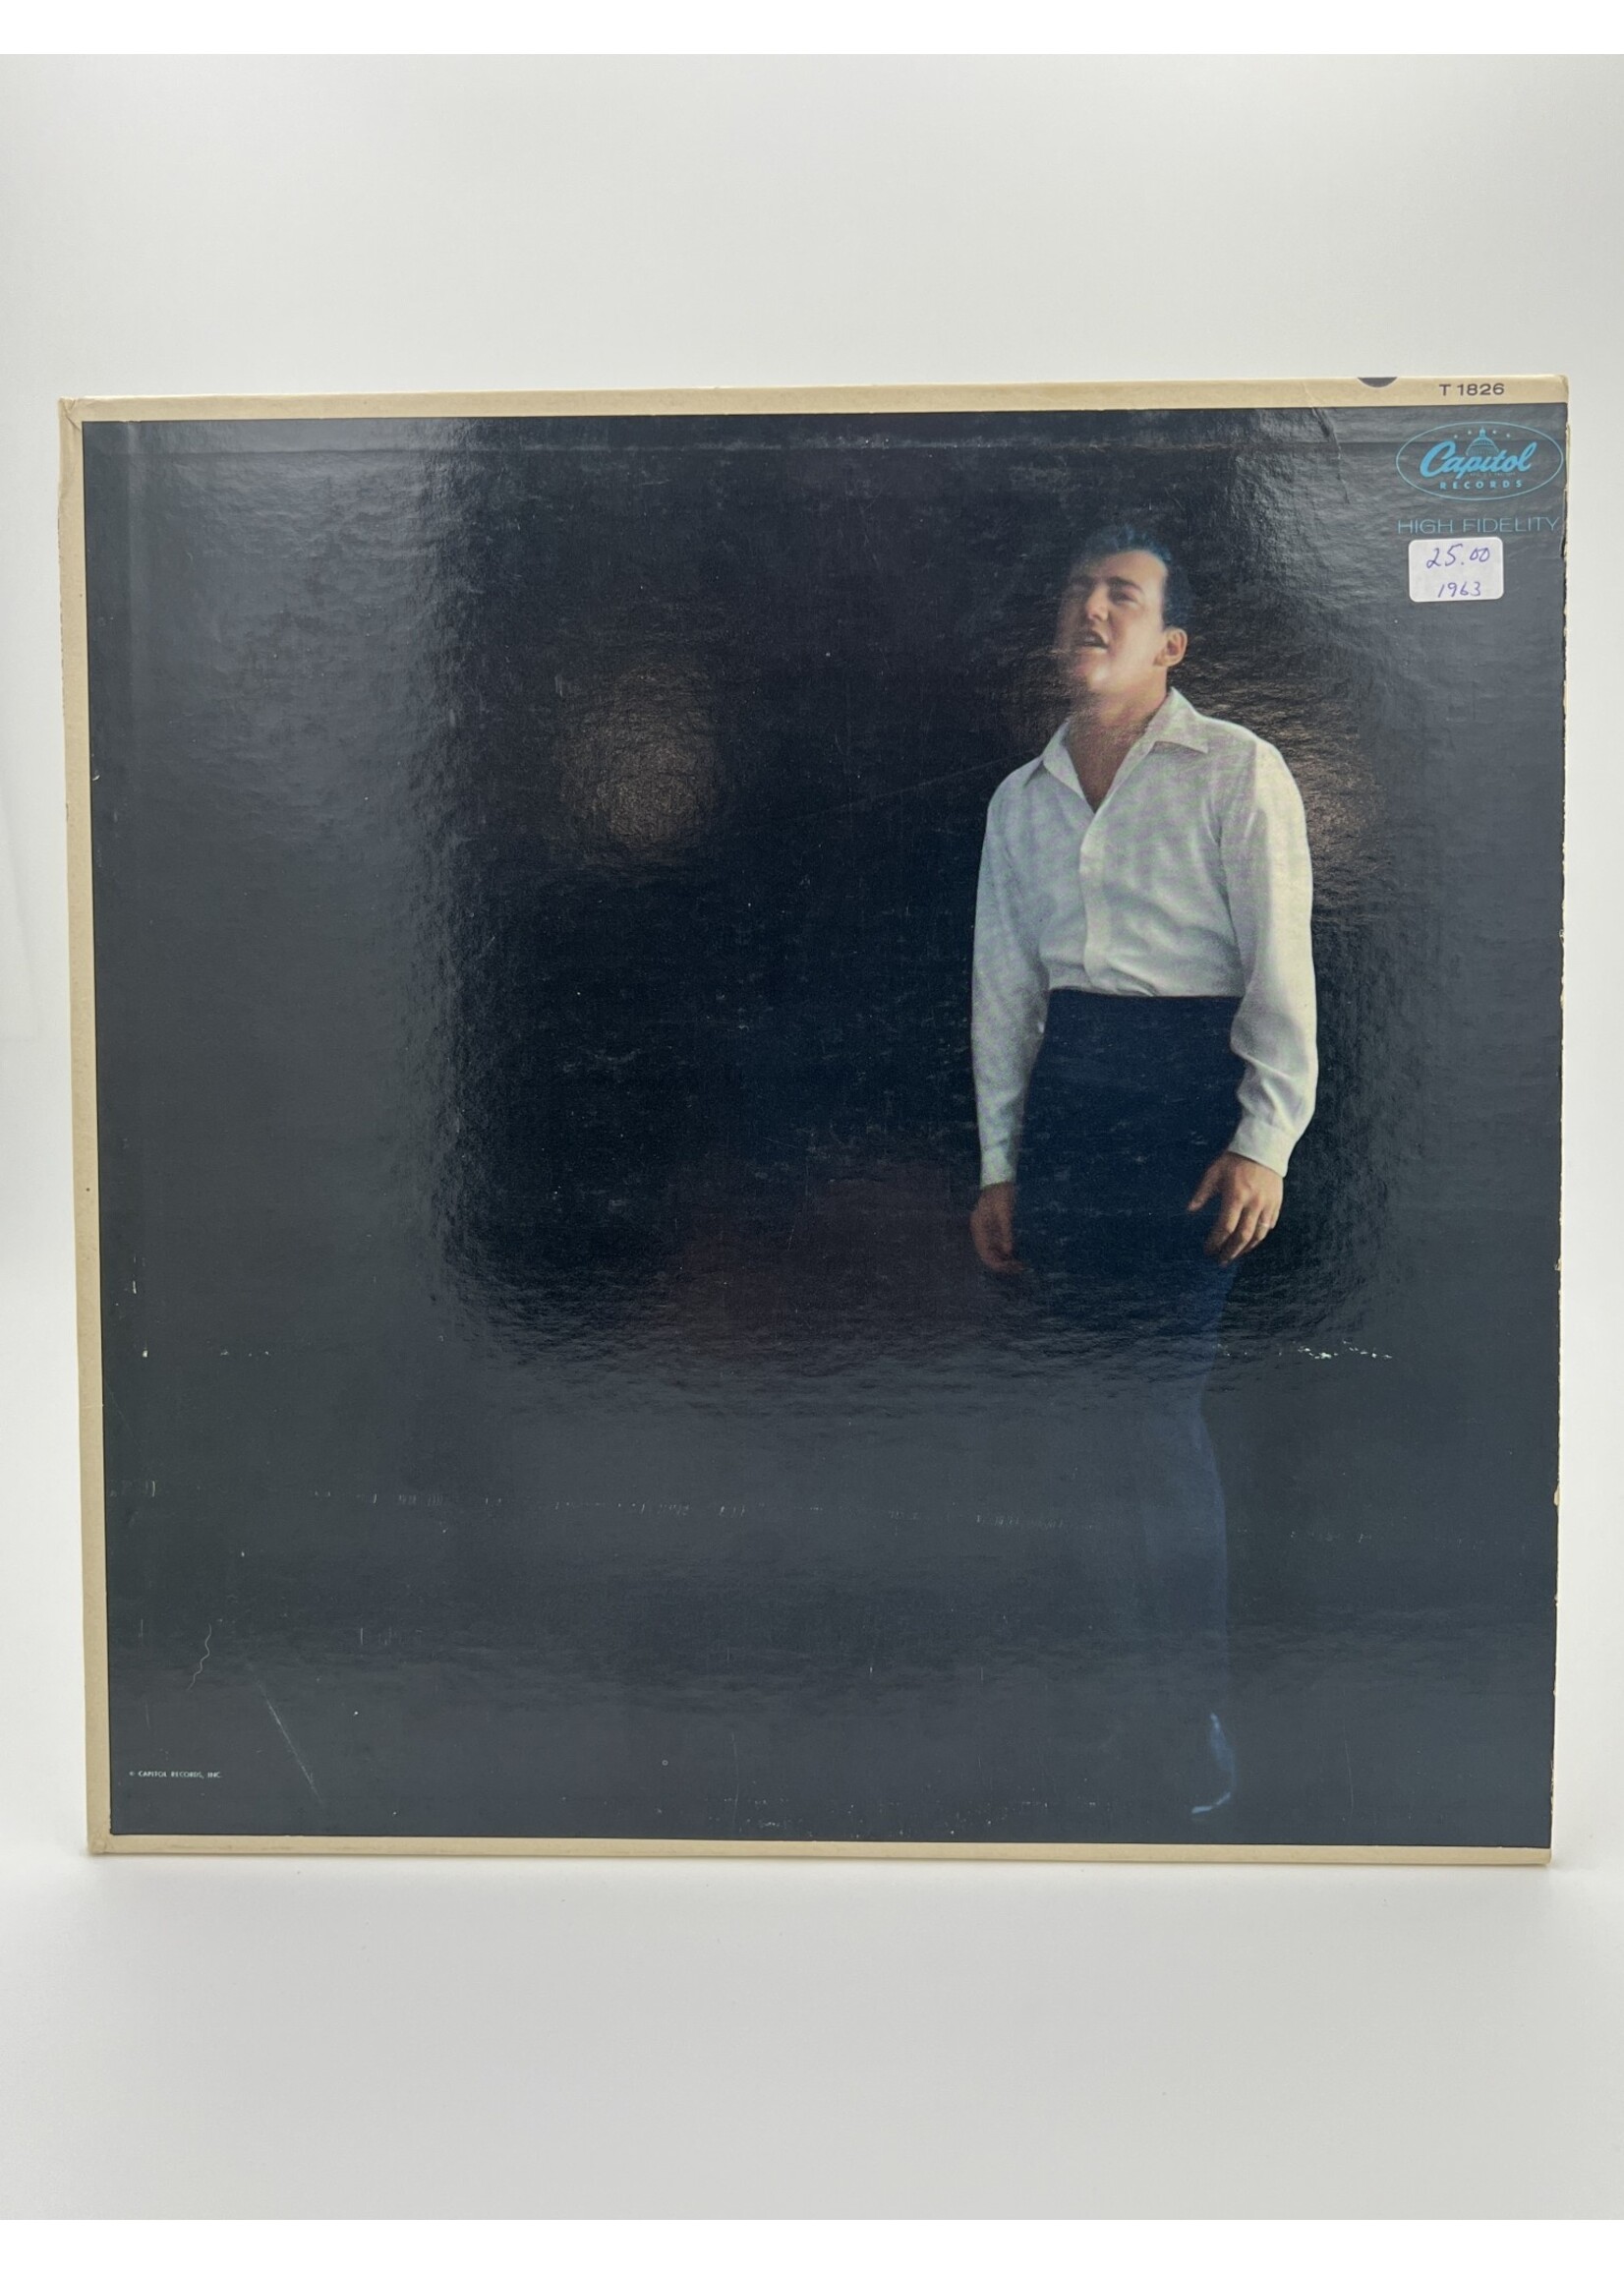 LP   Bobby Darin Earthy LP Record